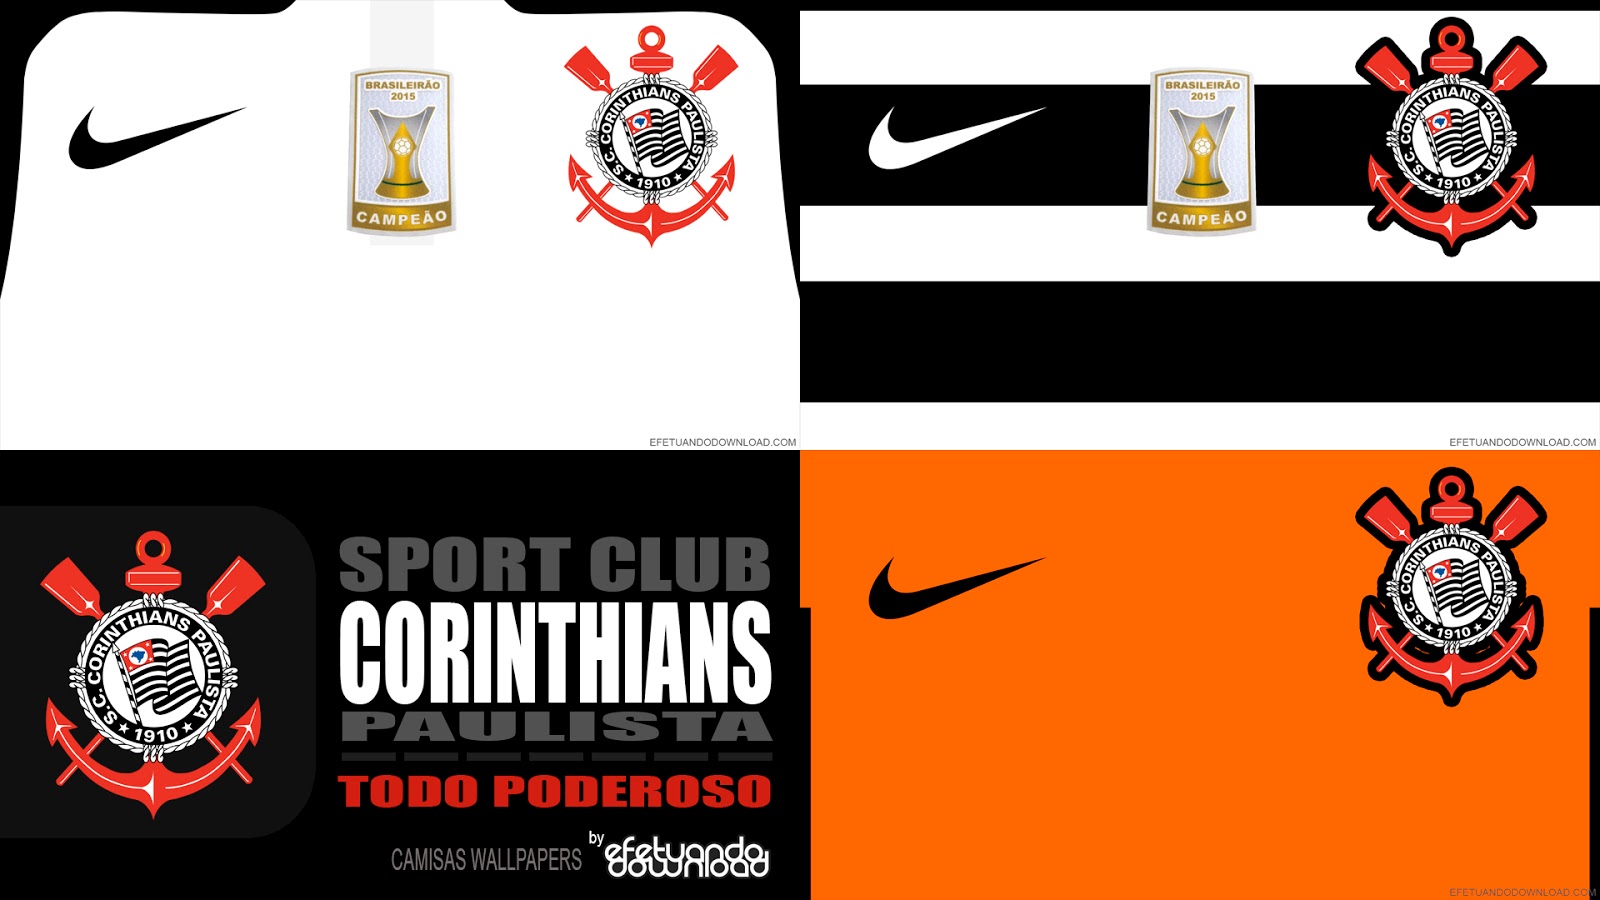 [Full HD] Wallpapers: Camisas Corinthians 2016 (Exclusivo)